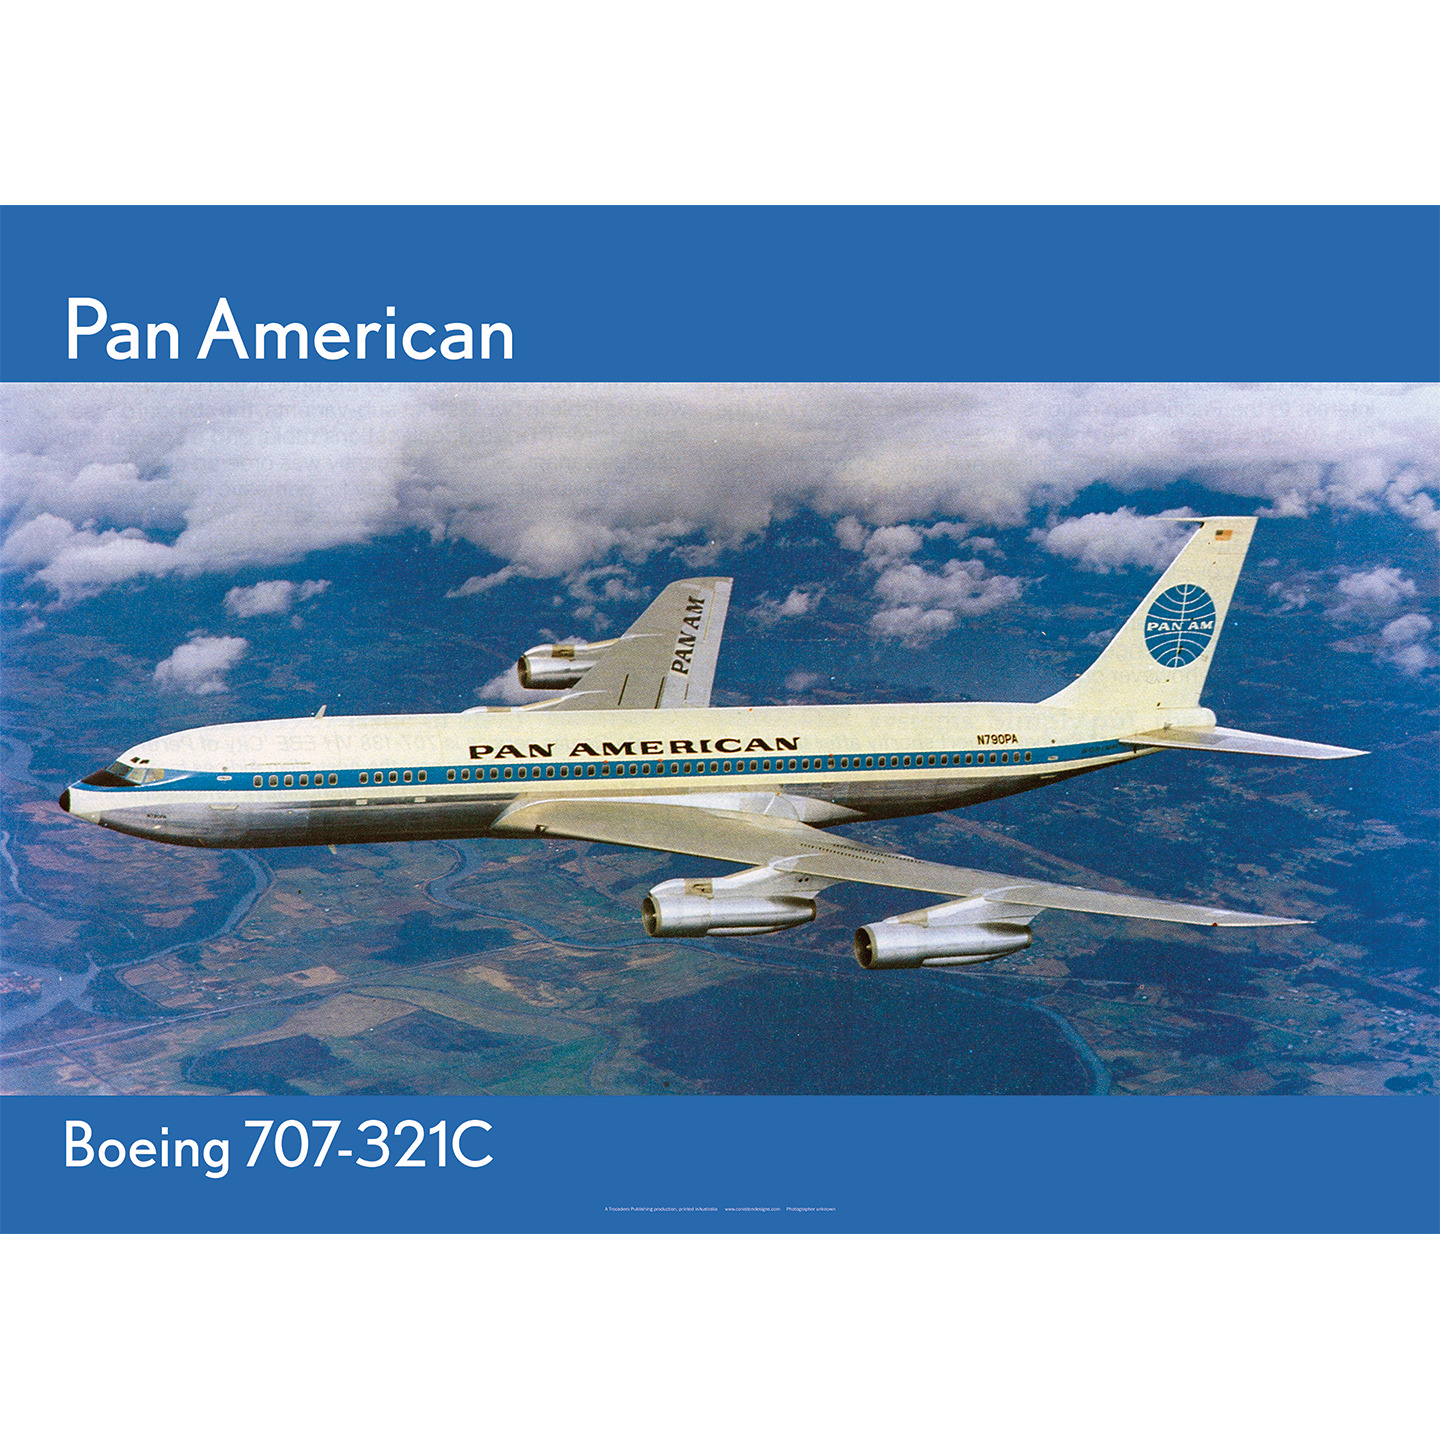 Pan American Boeing 707-321C Art Print - Aerial View Aviation 1960s